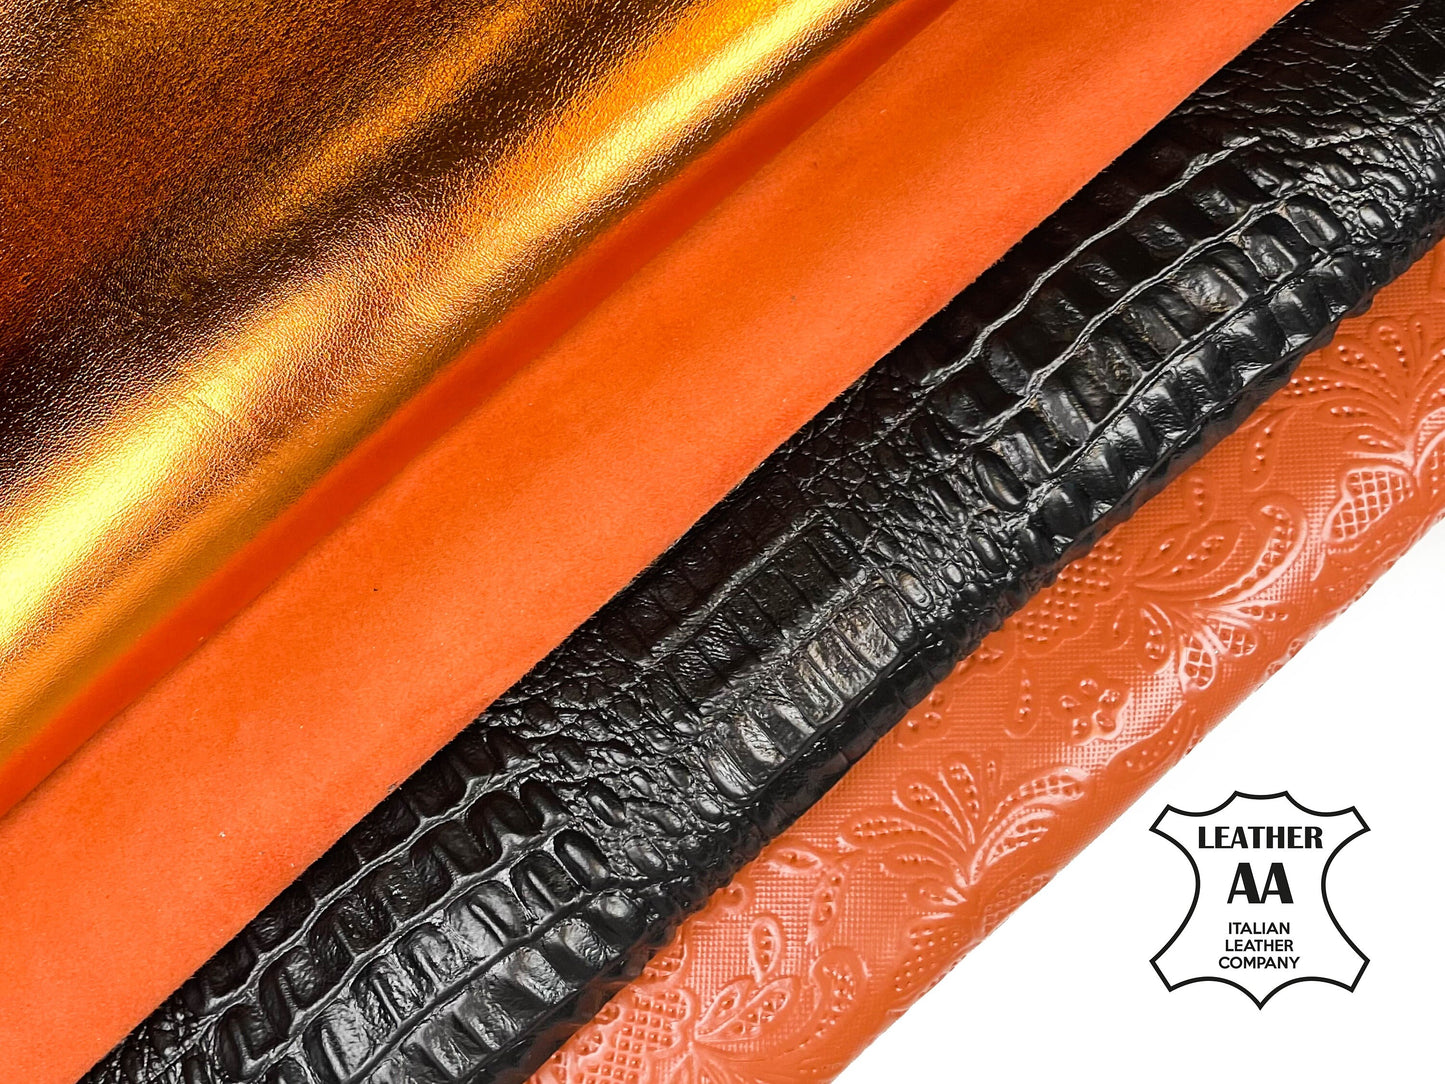 Halloween Theme Lambskin Leather Bundle of 4 Italian Skins 0.5-1.0mm / 1.25-2.5oz